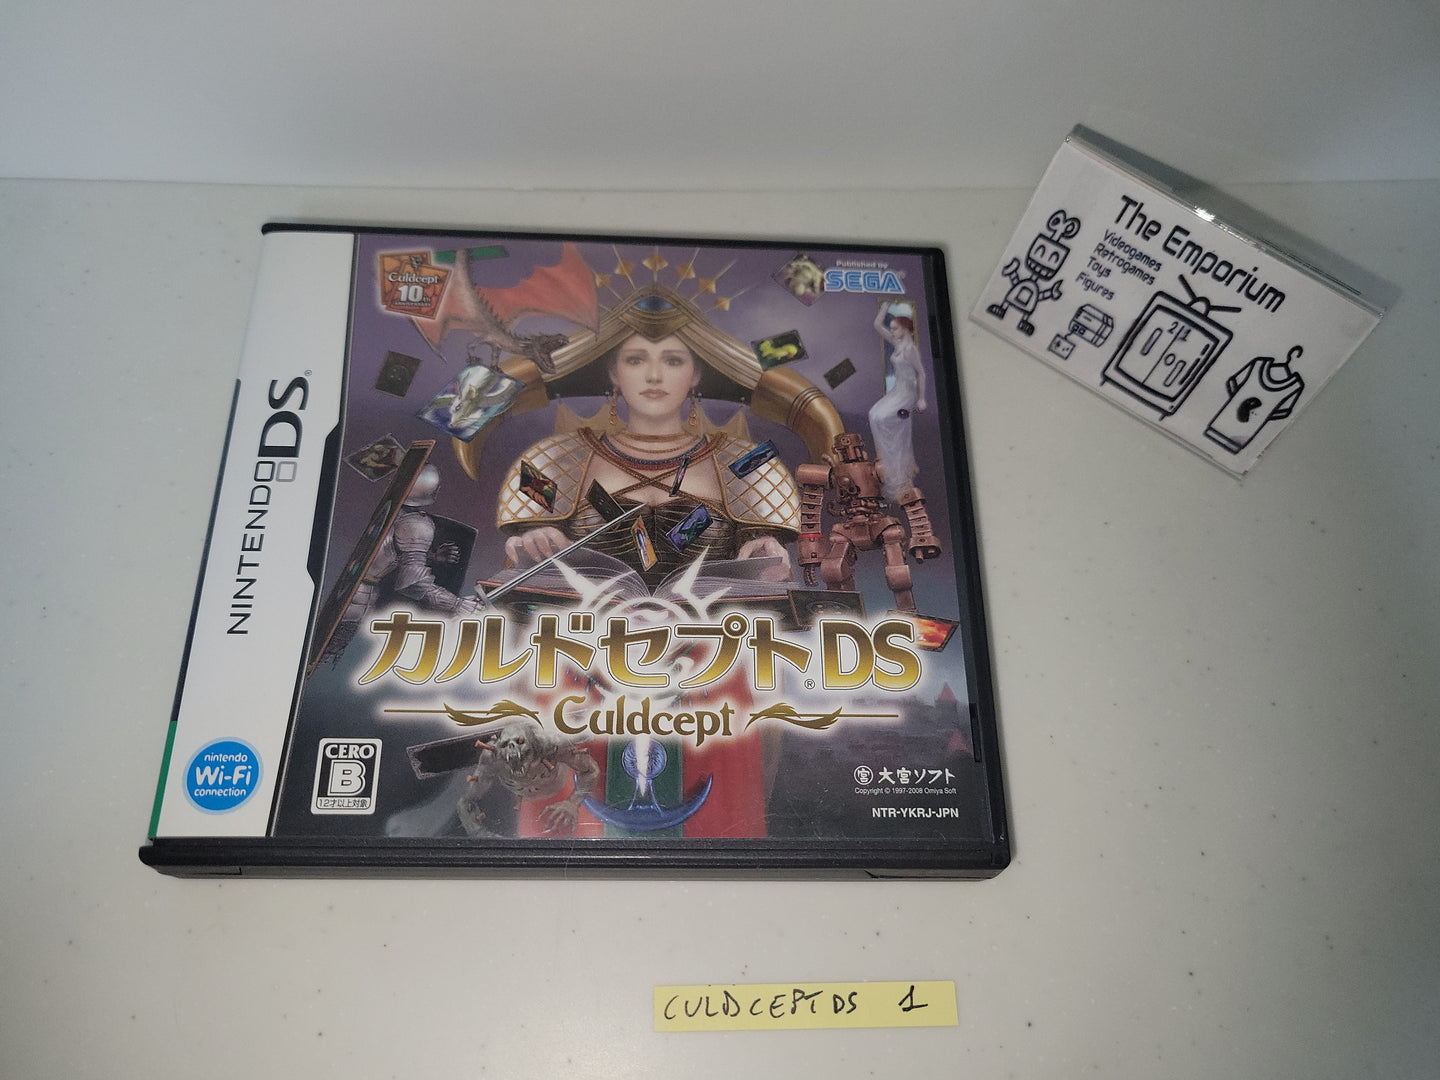 Culdcept DS
- Nintendo Ds NDS